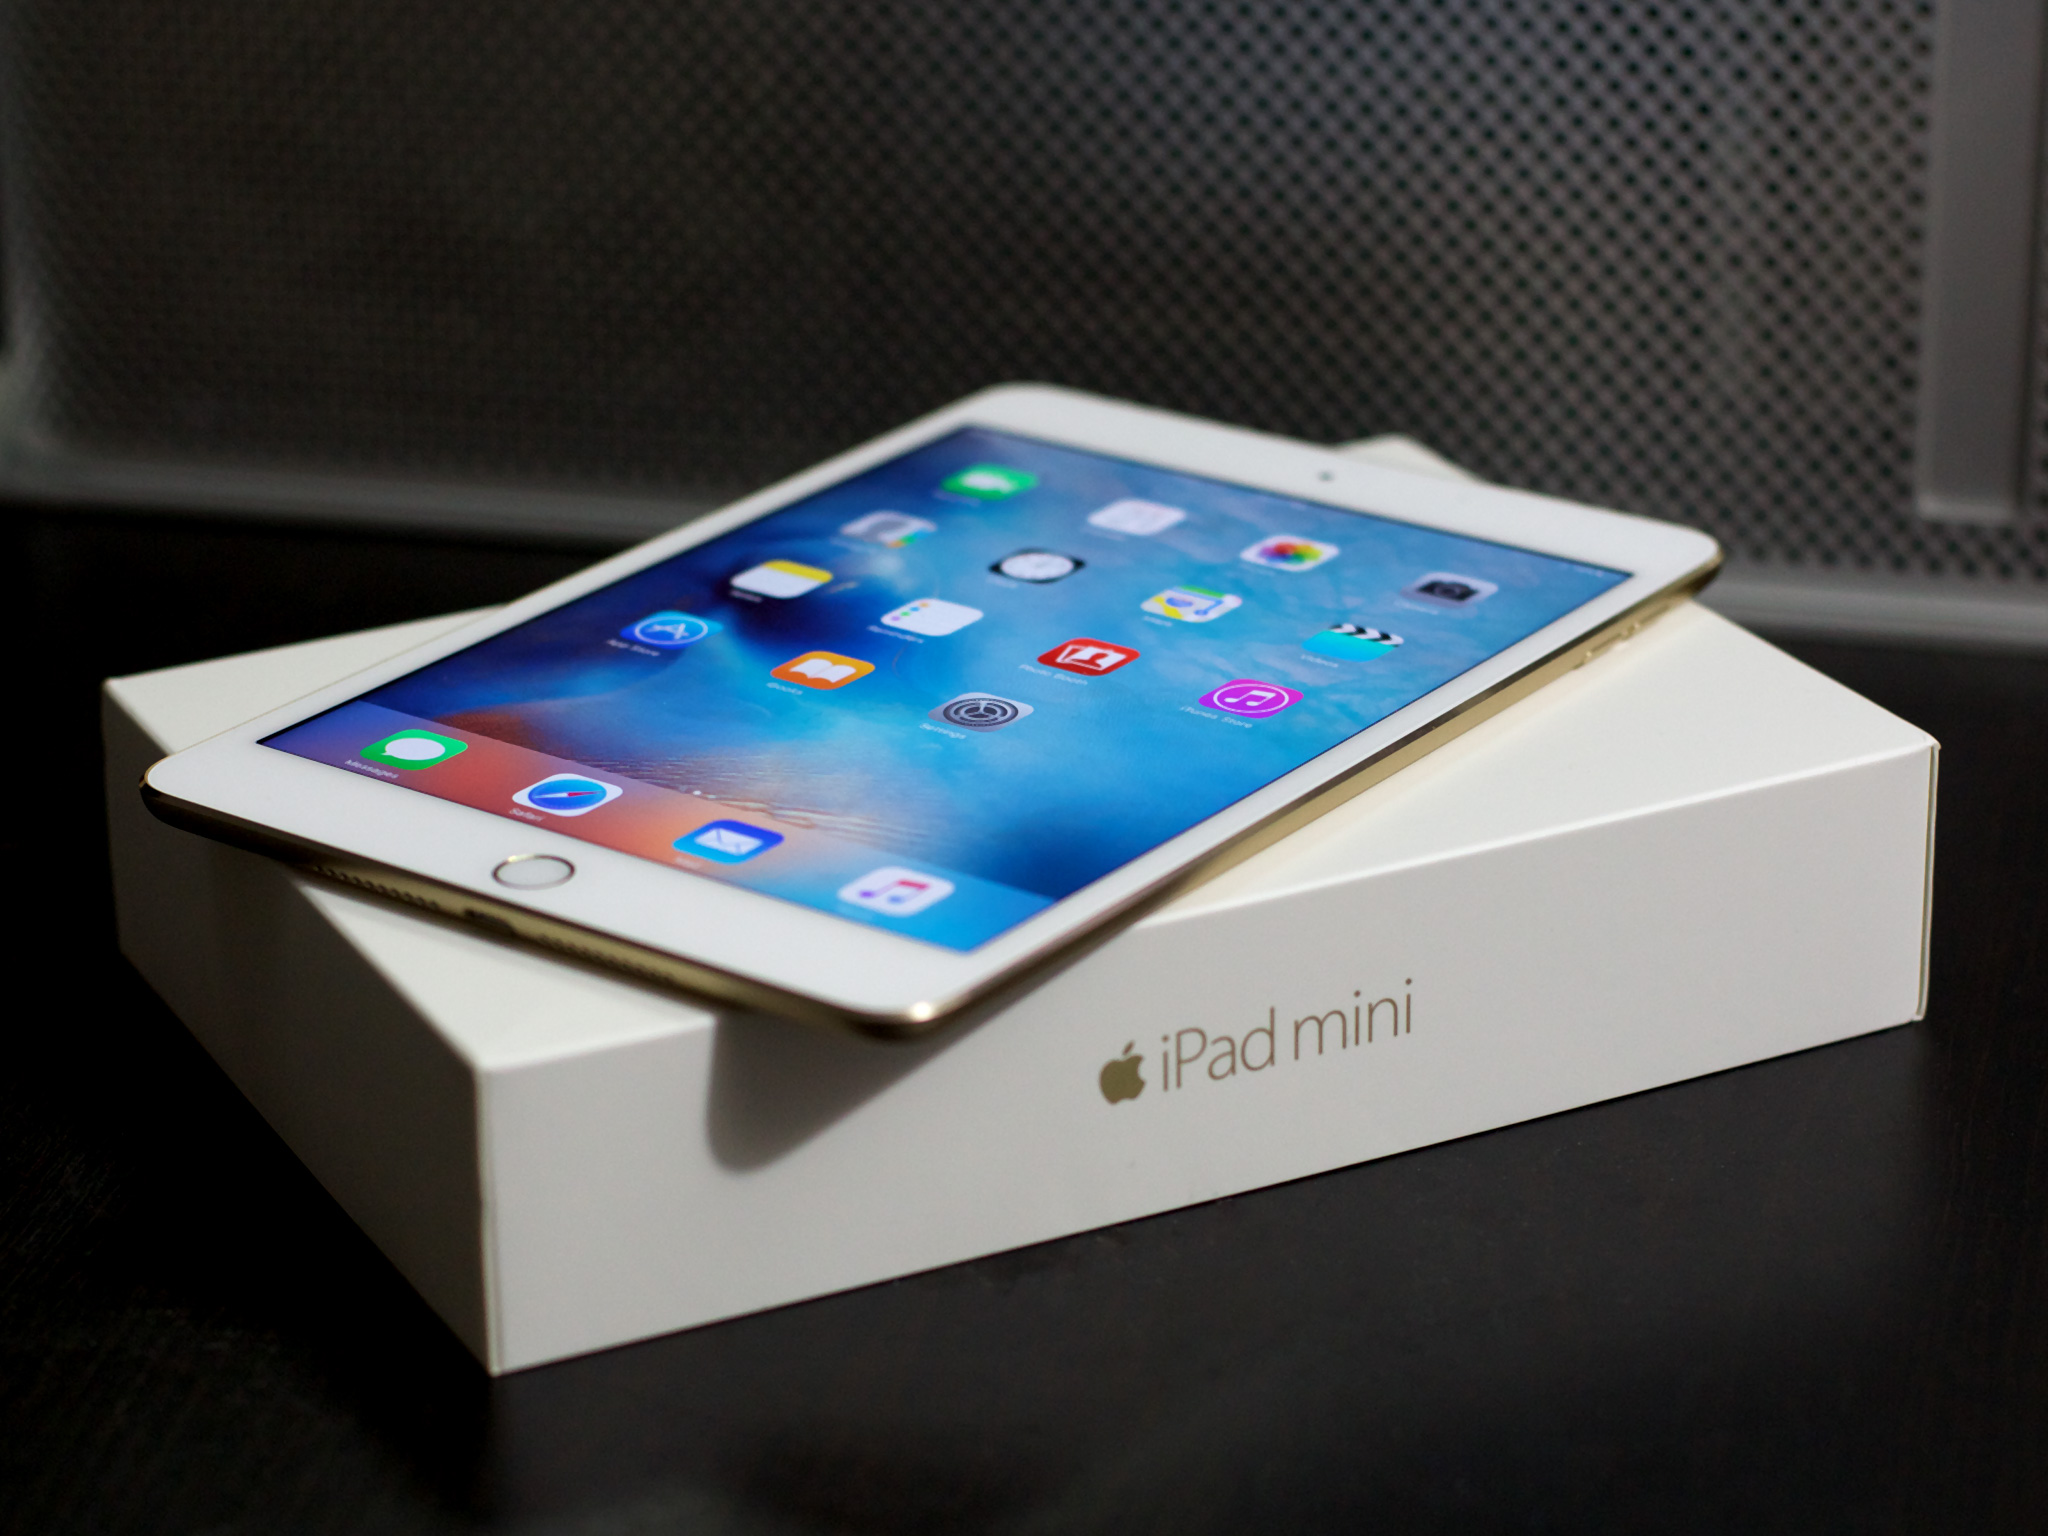 iPad mini 4, iPad Air 2 now available through T-Mobile's JUMP! On